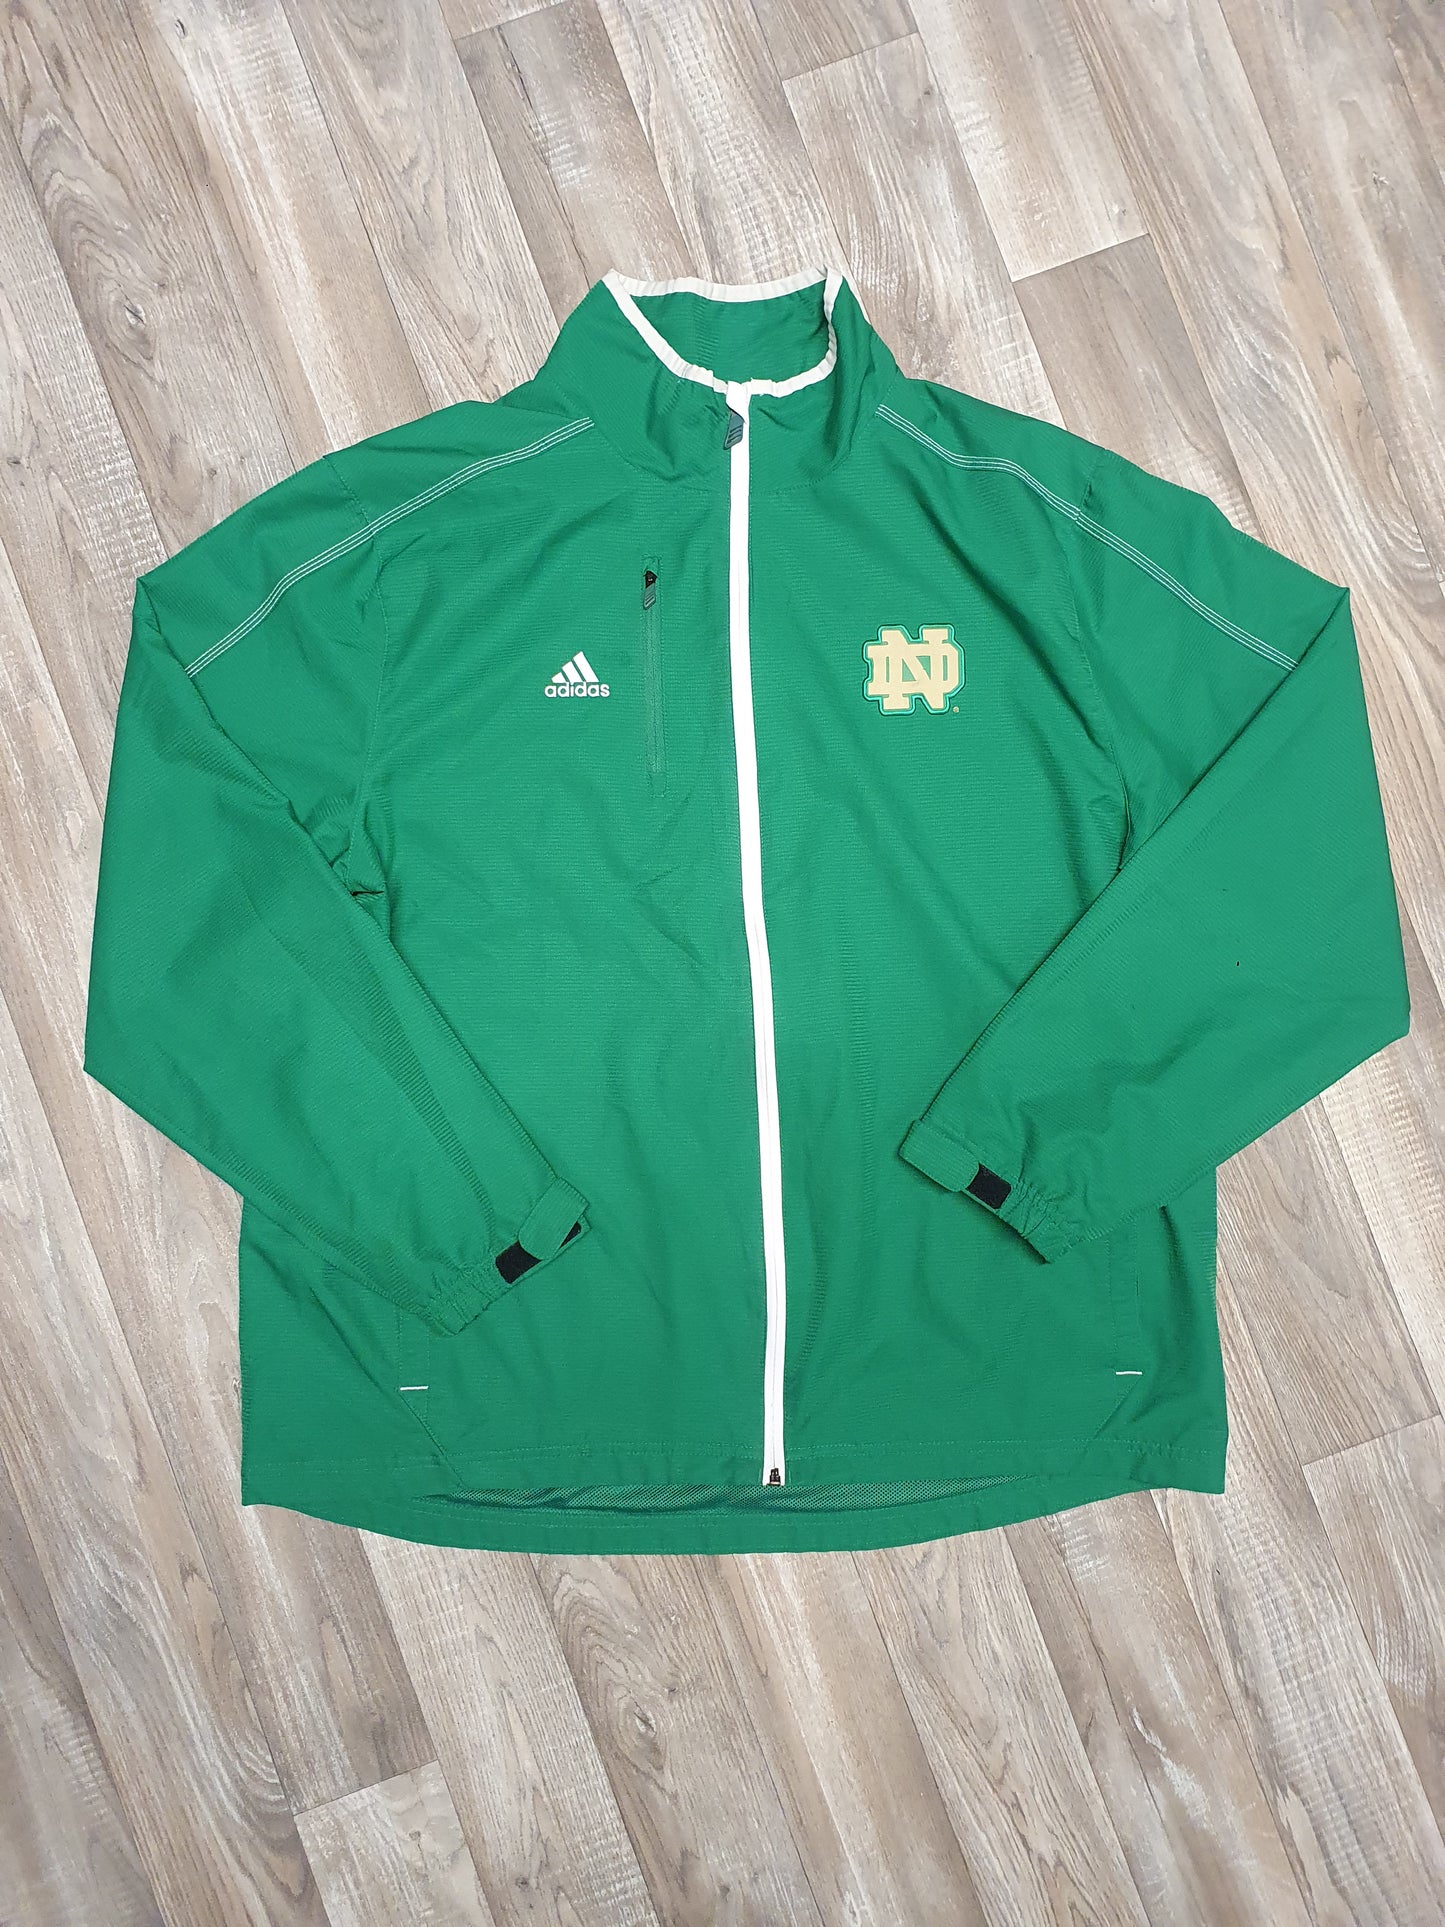 Notre Dame Fighting Irish Jacket Size XL